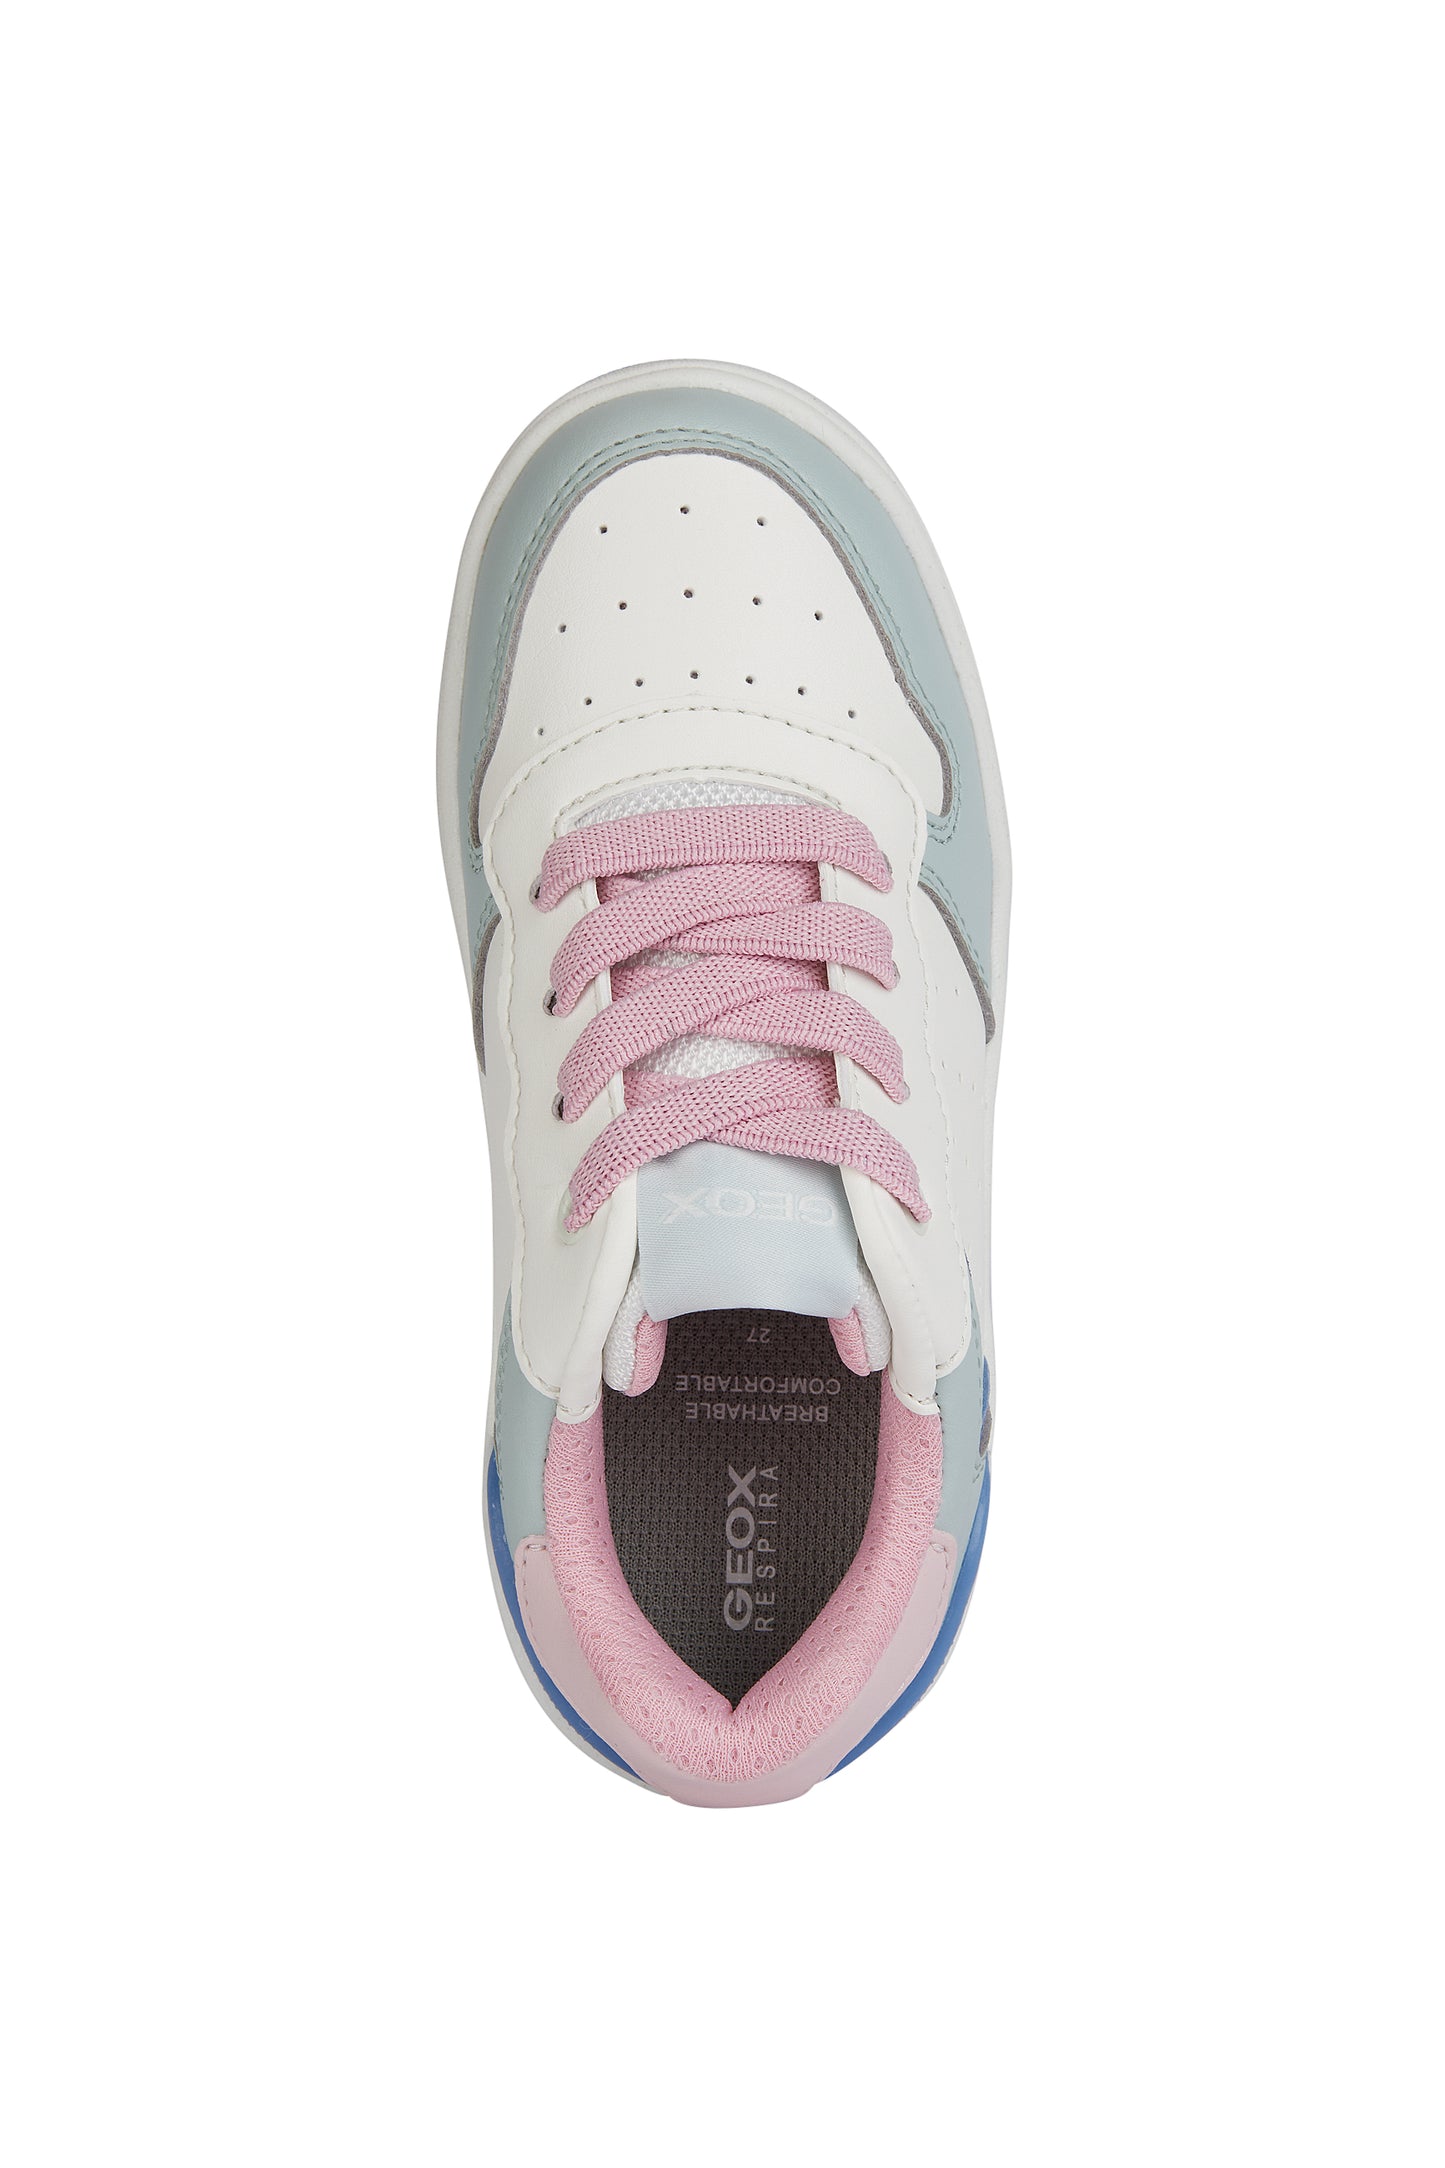 Washiba Casual Sneaker Shoe White/Ice/Pink